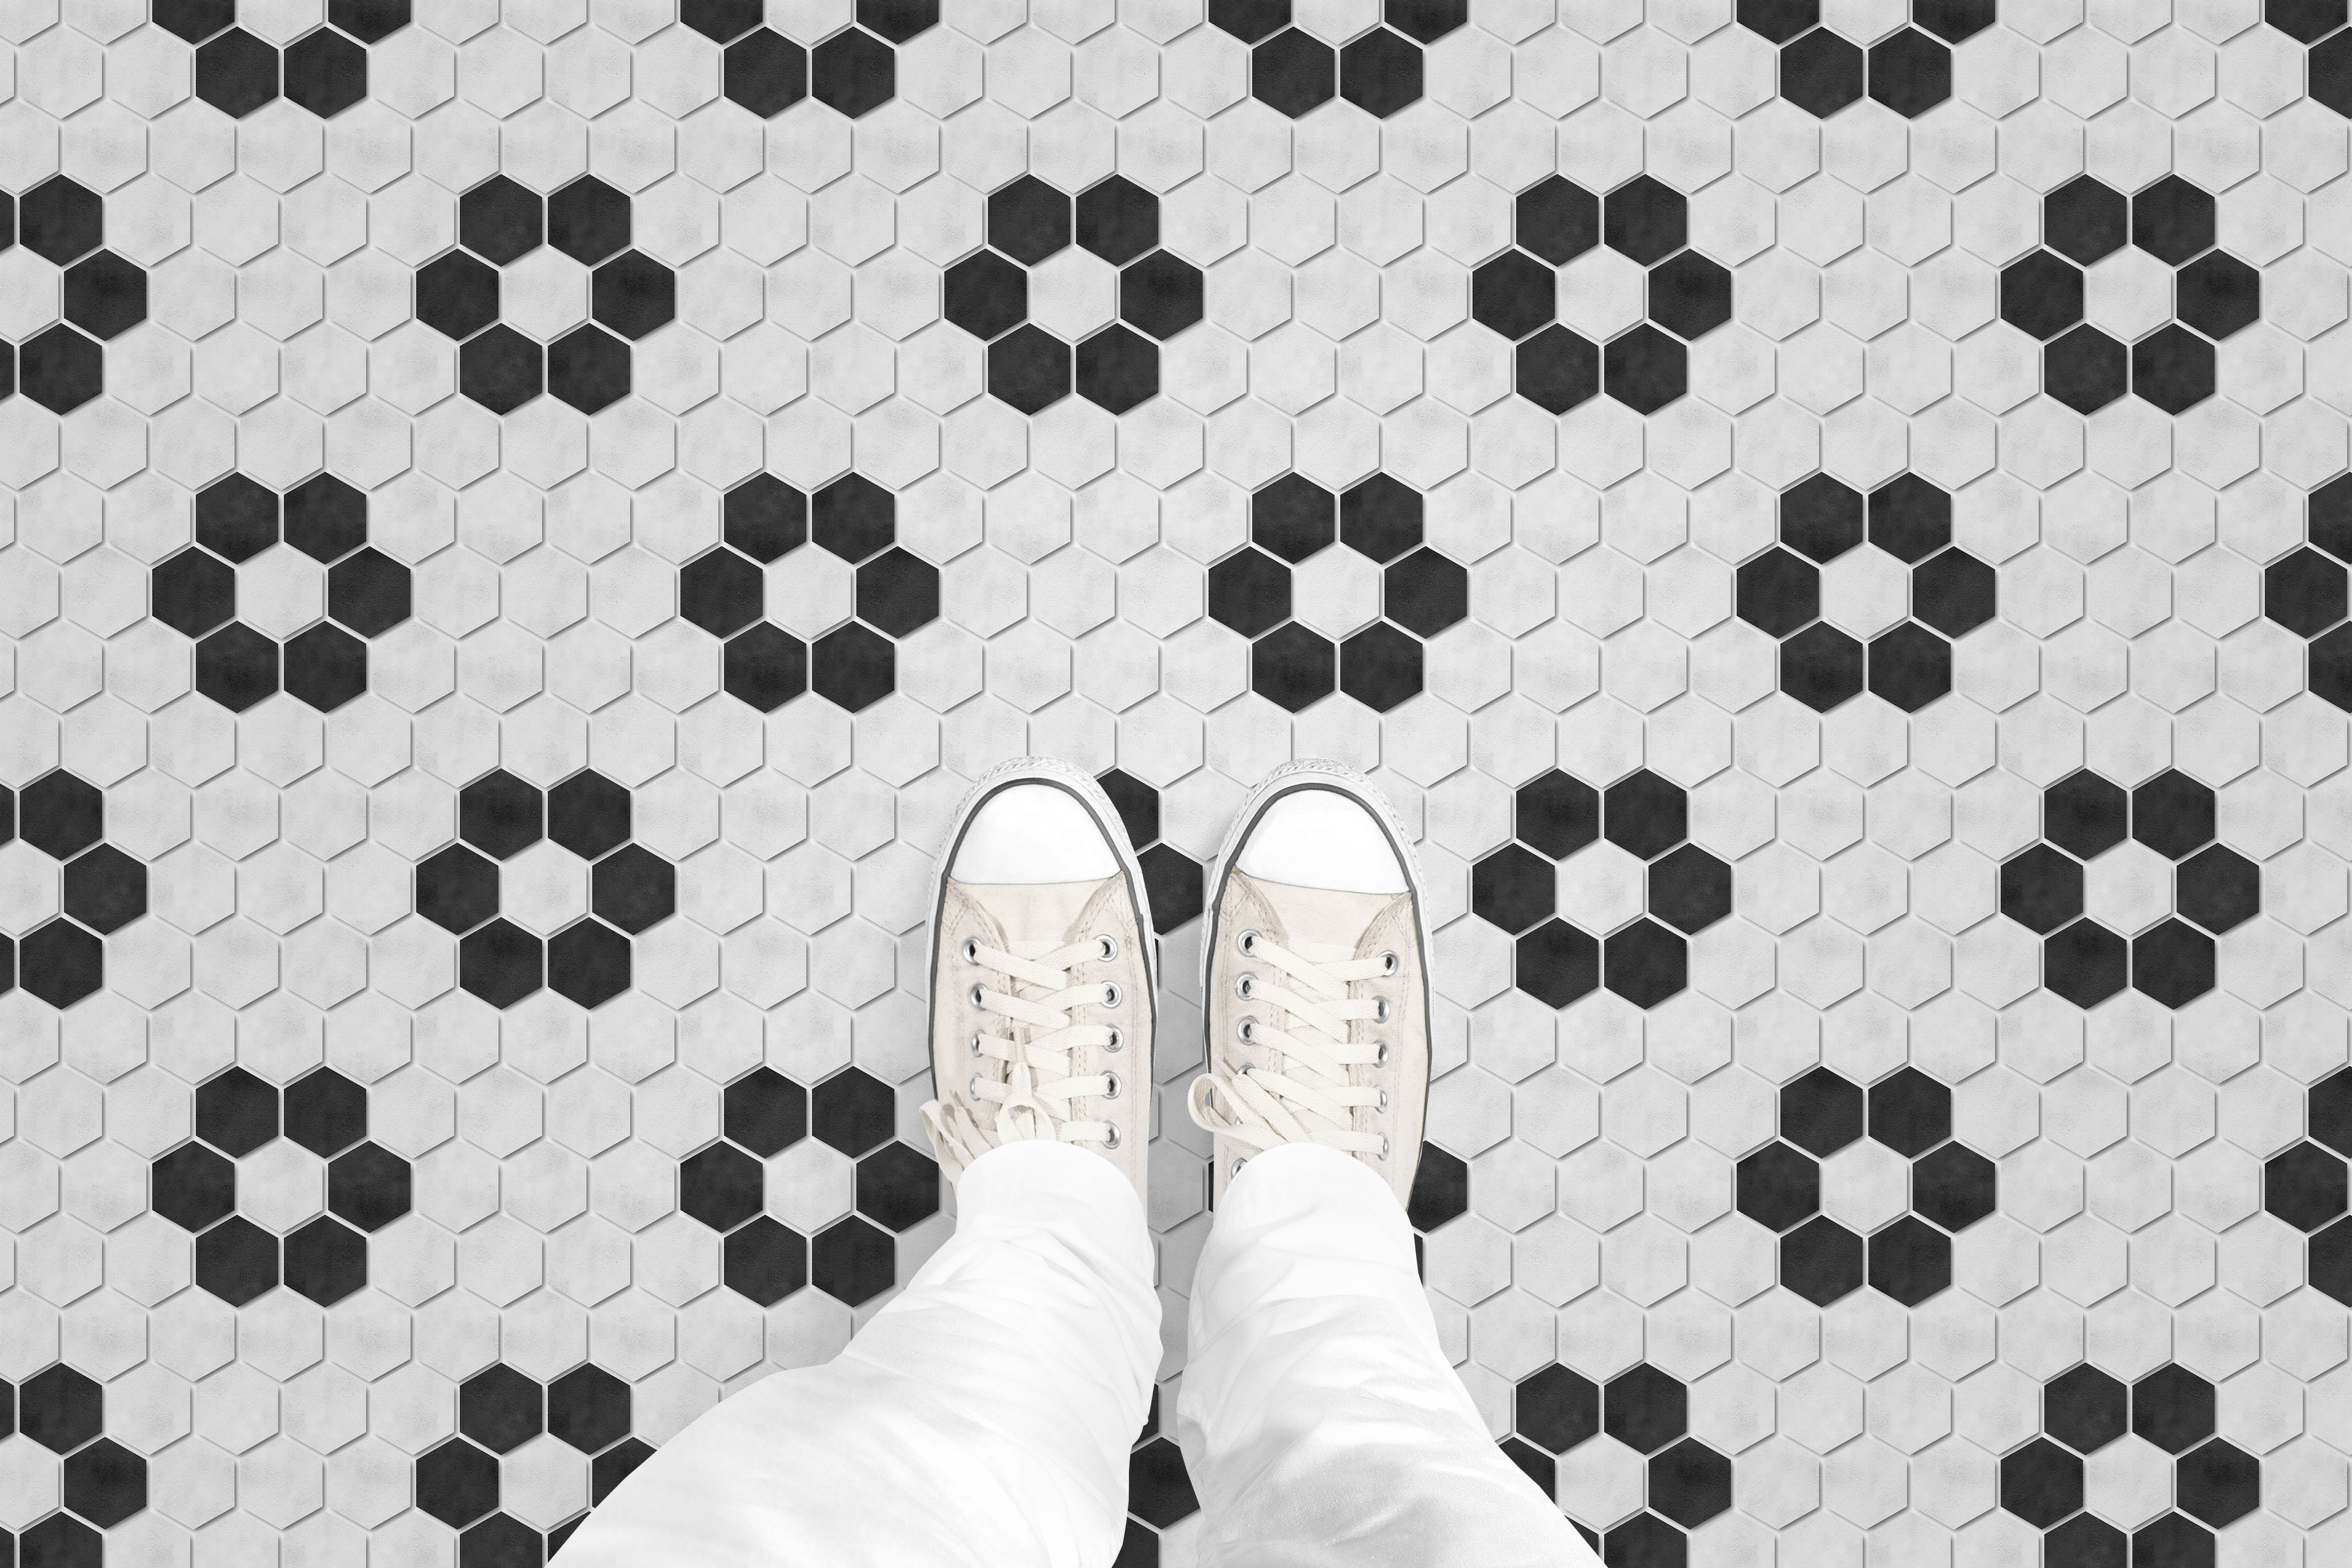 Hexagon Flower Tile floor_feet_shop.gif_p2229a1.jpg